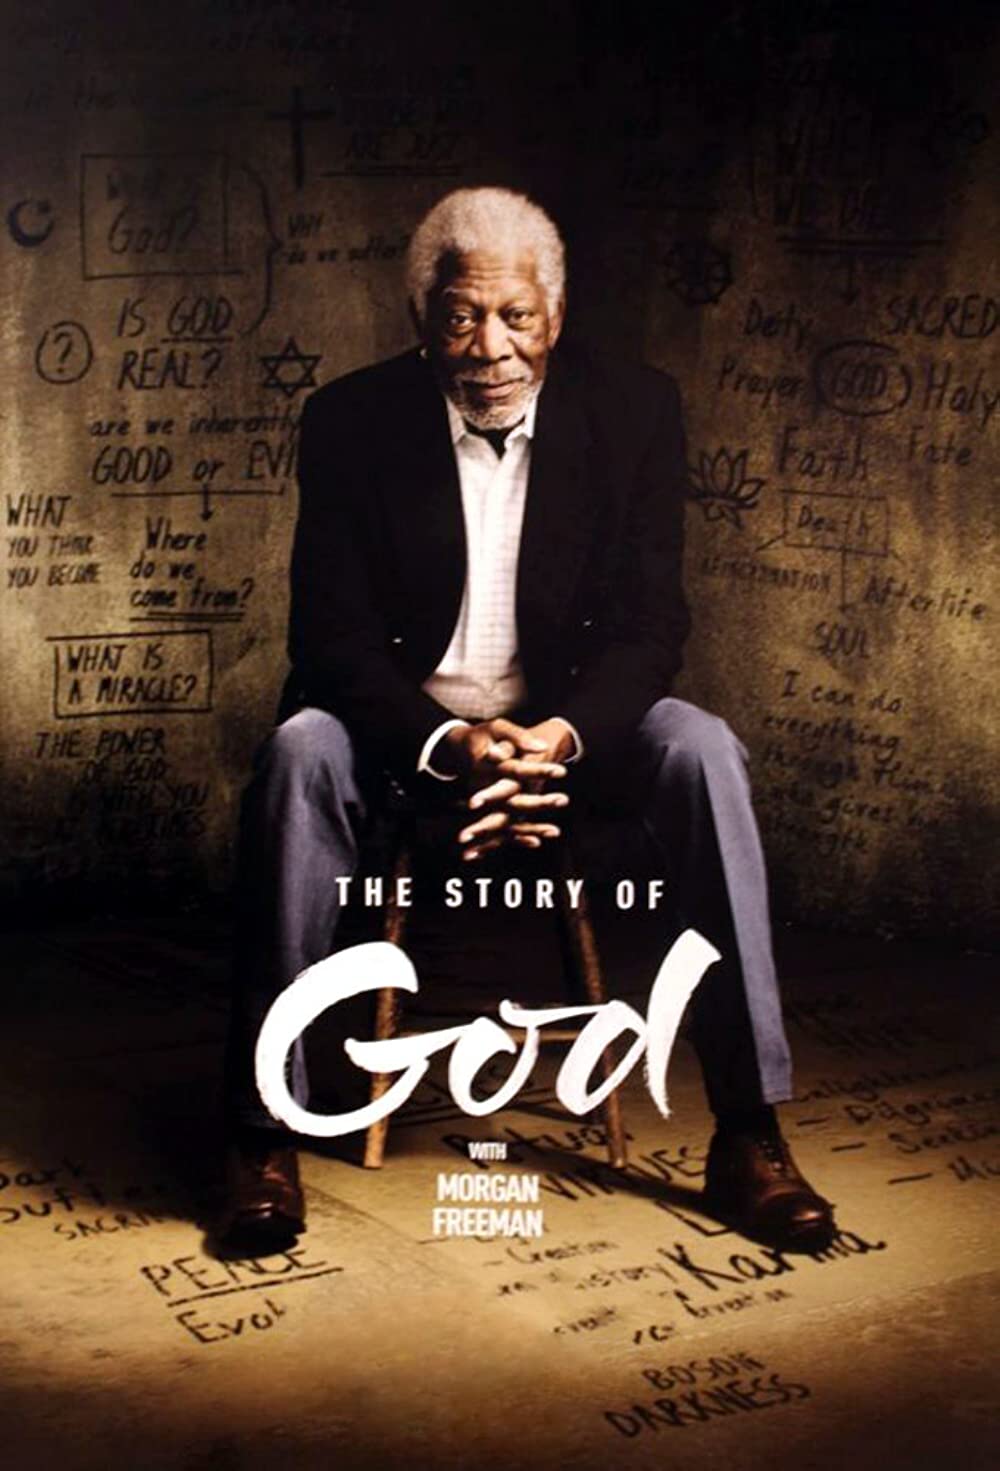 Filmbeschreibung zu The Story of God with Morgan Freeman: Staffel 3